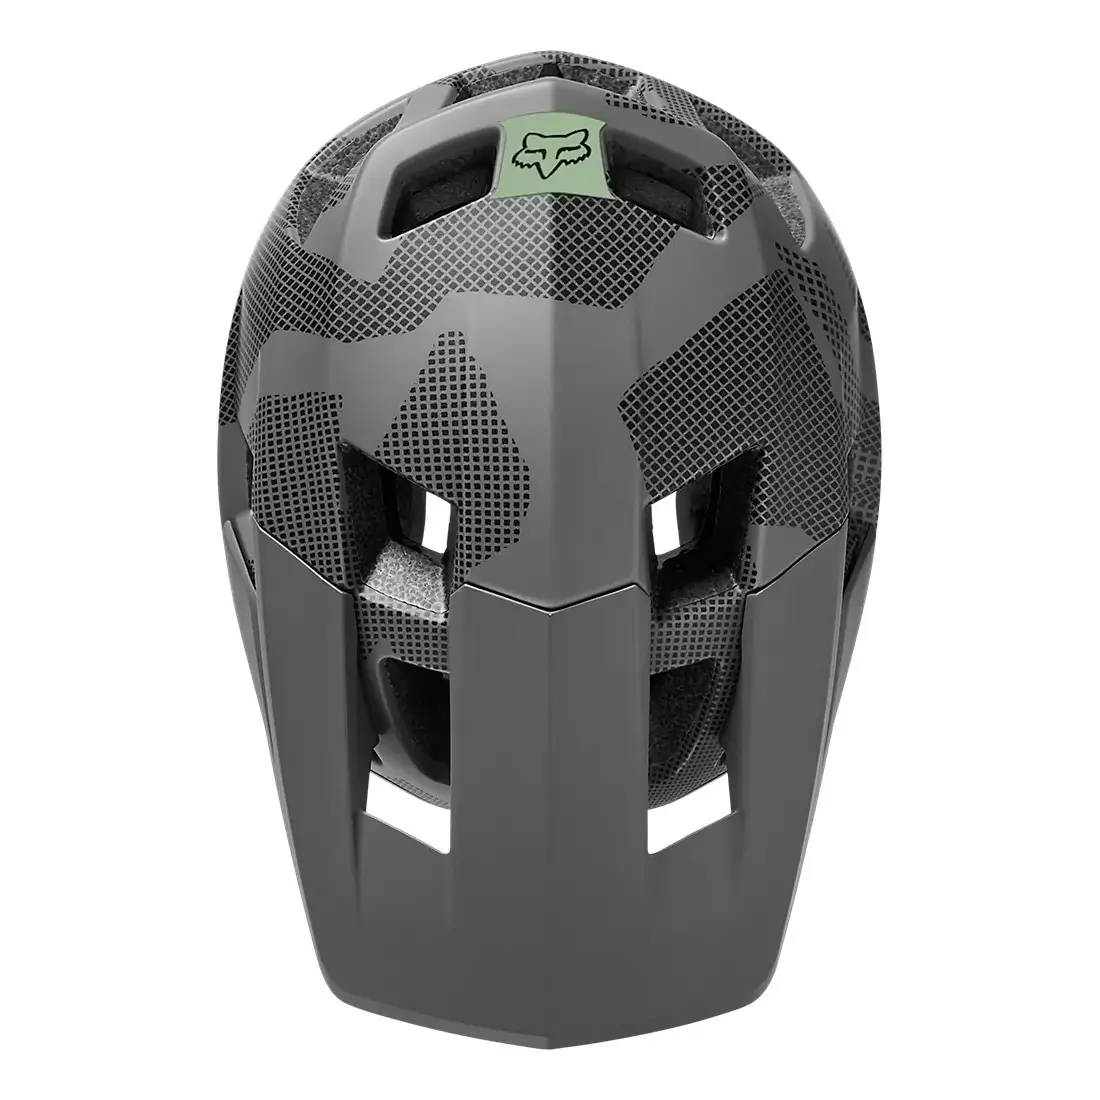 Dropframe Pro Camo Enduro Helm Grau Camouflage Größe S (52-54 cm) #4